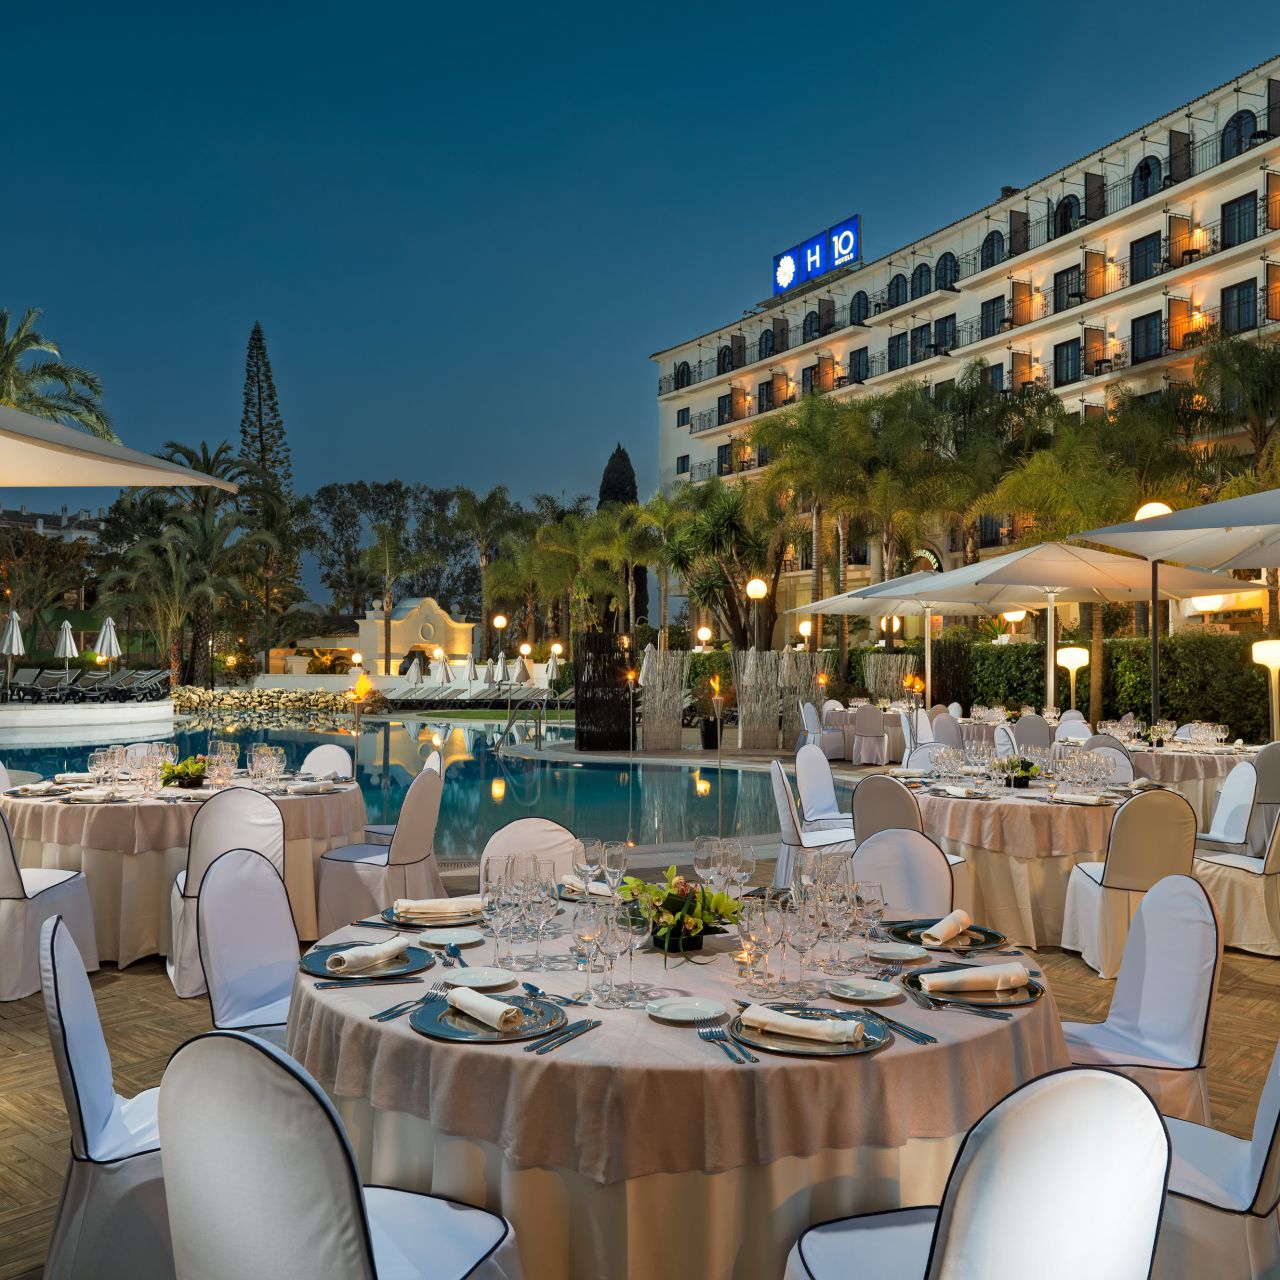 H10 Andalucía Plaza hotel en Marbella - HOTEL INFO